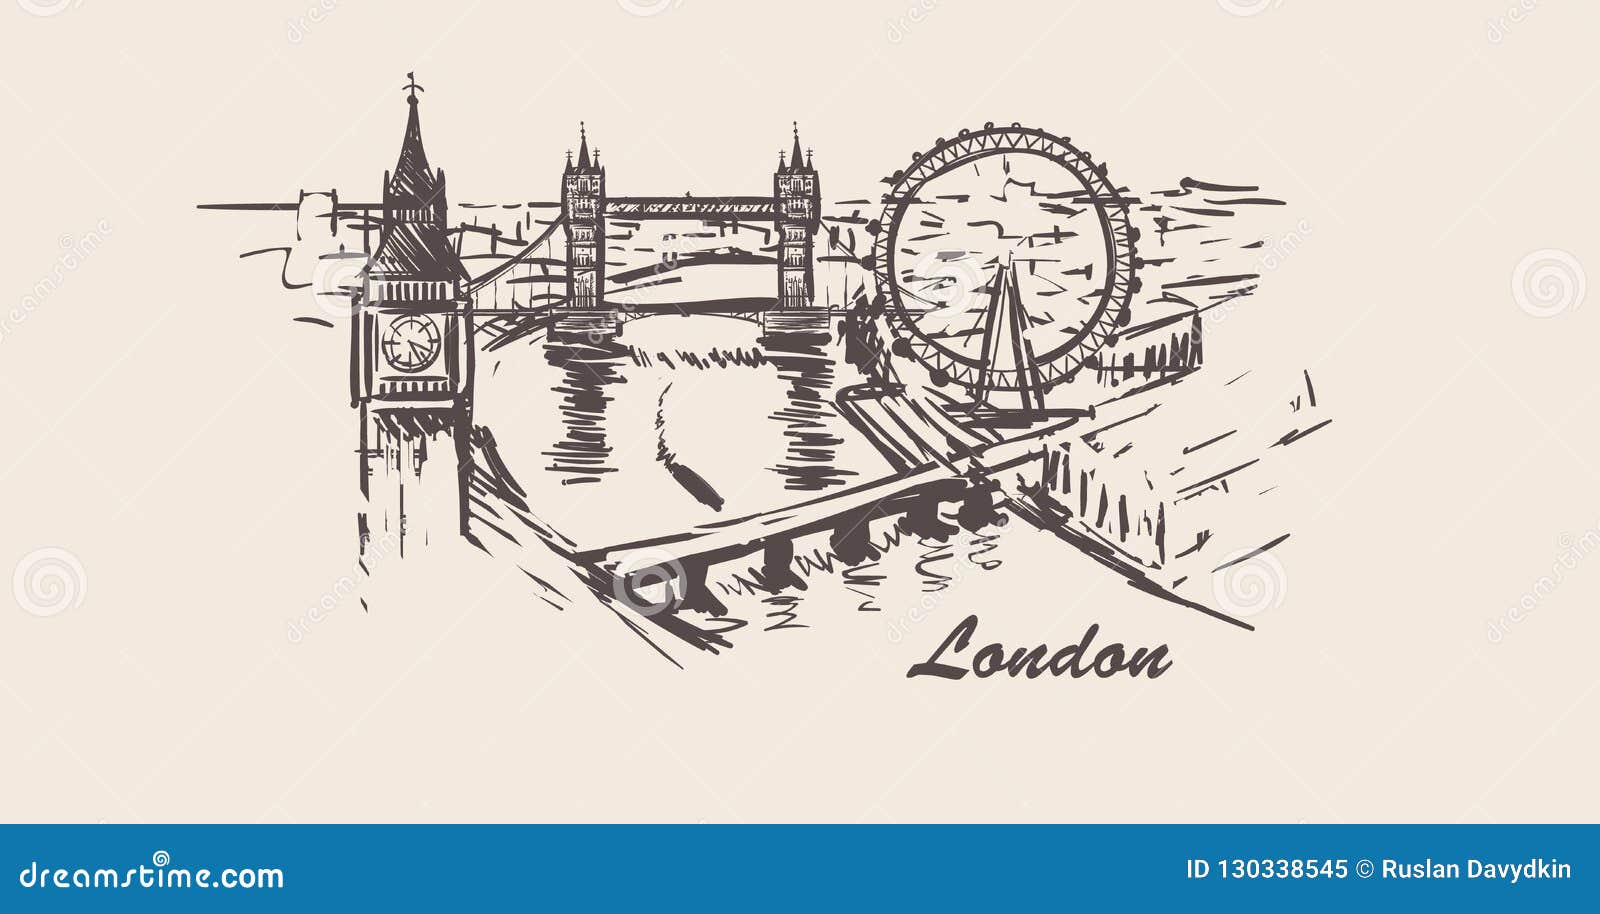 London City Skyline,hand-drawn Sketch Vector Illustration on White